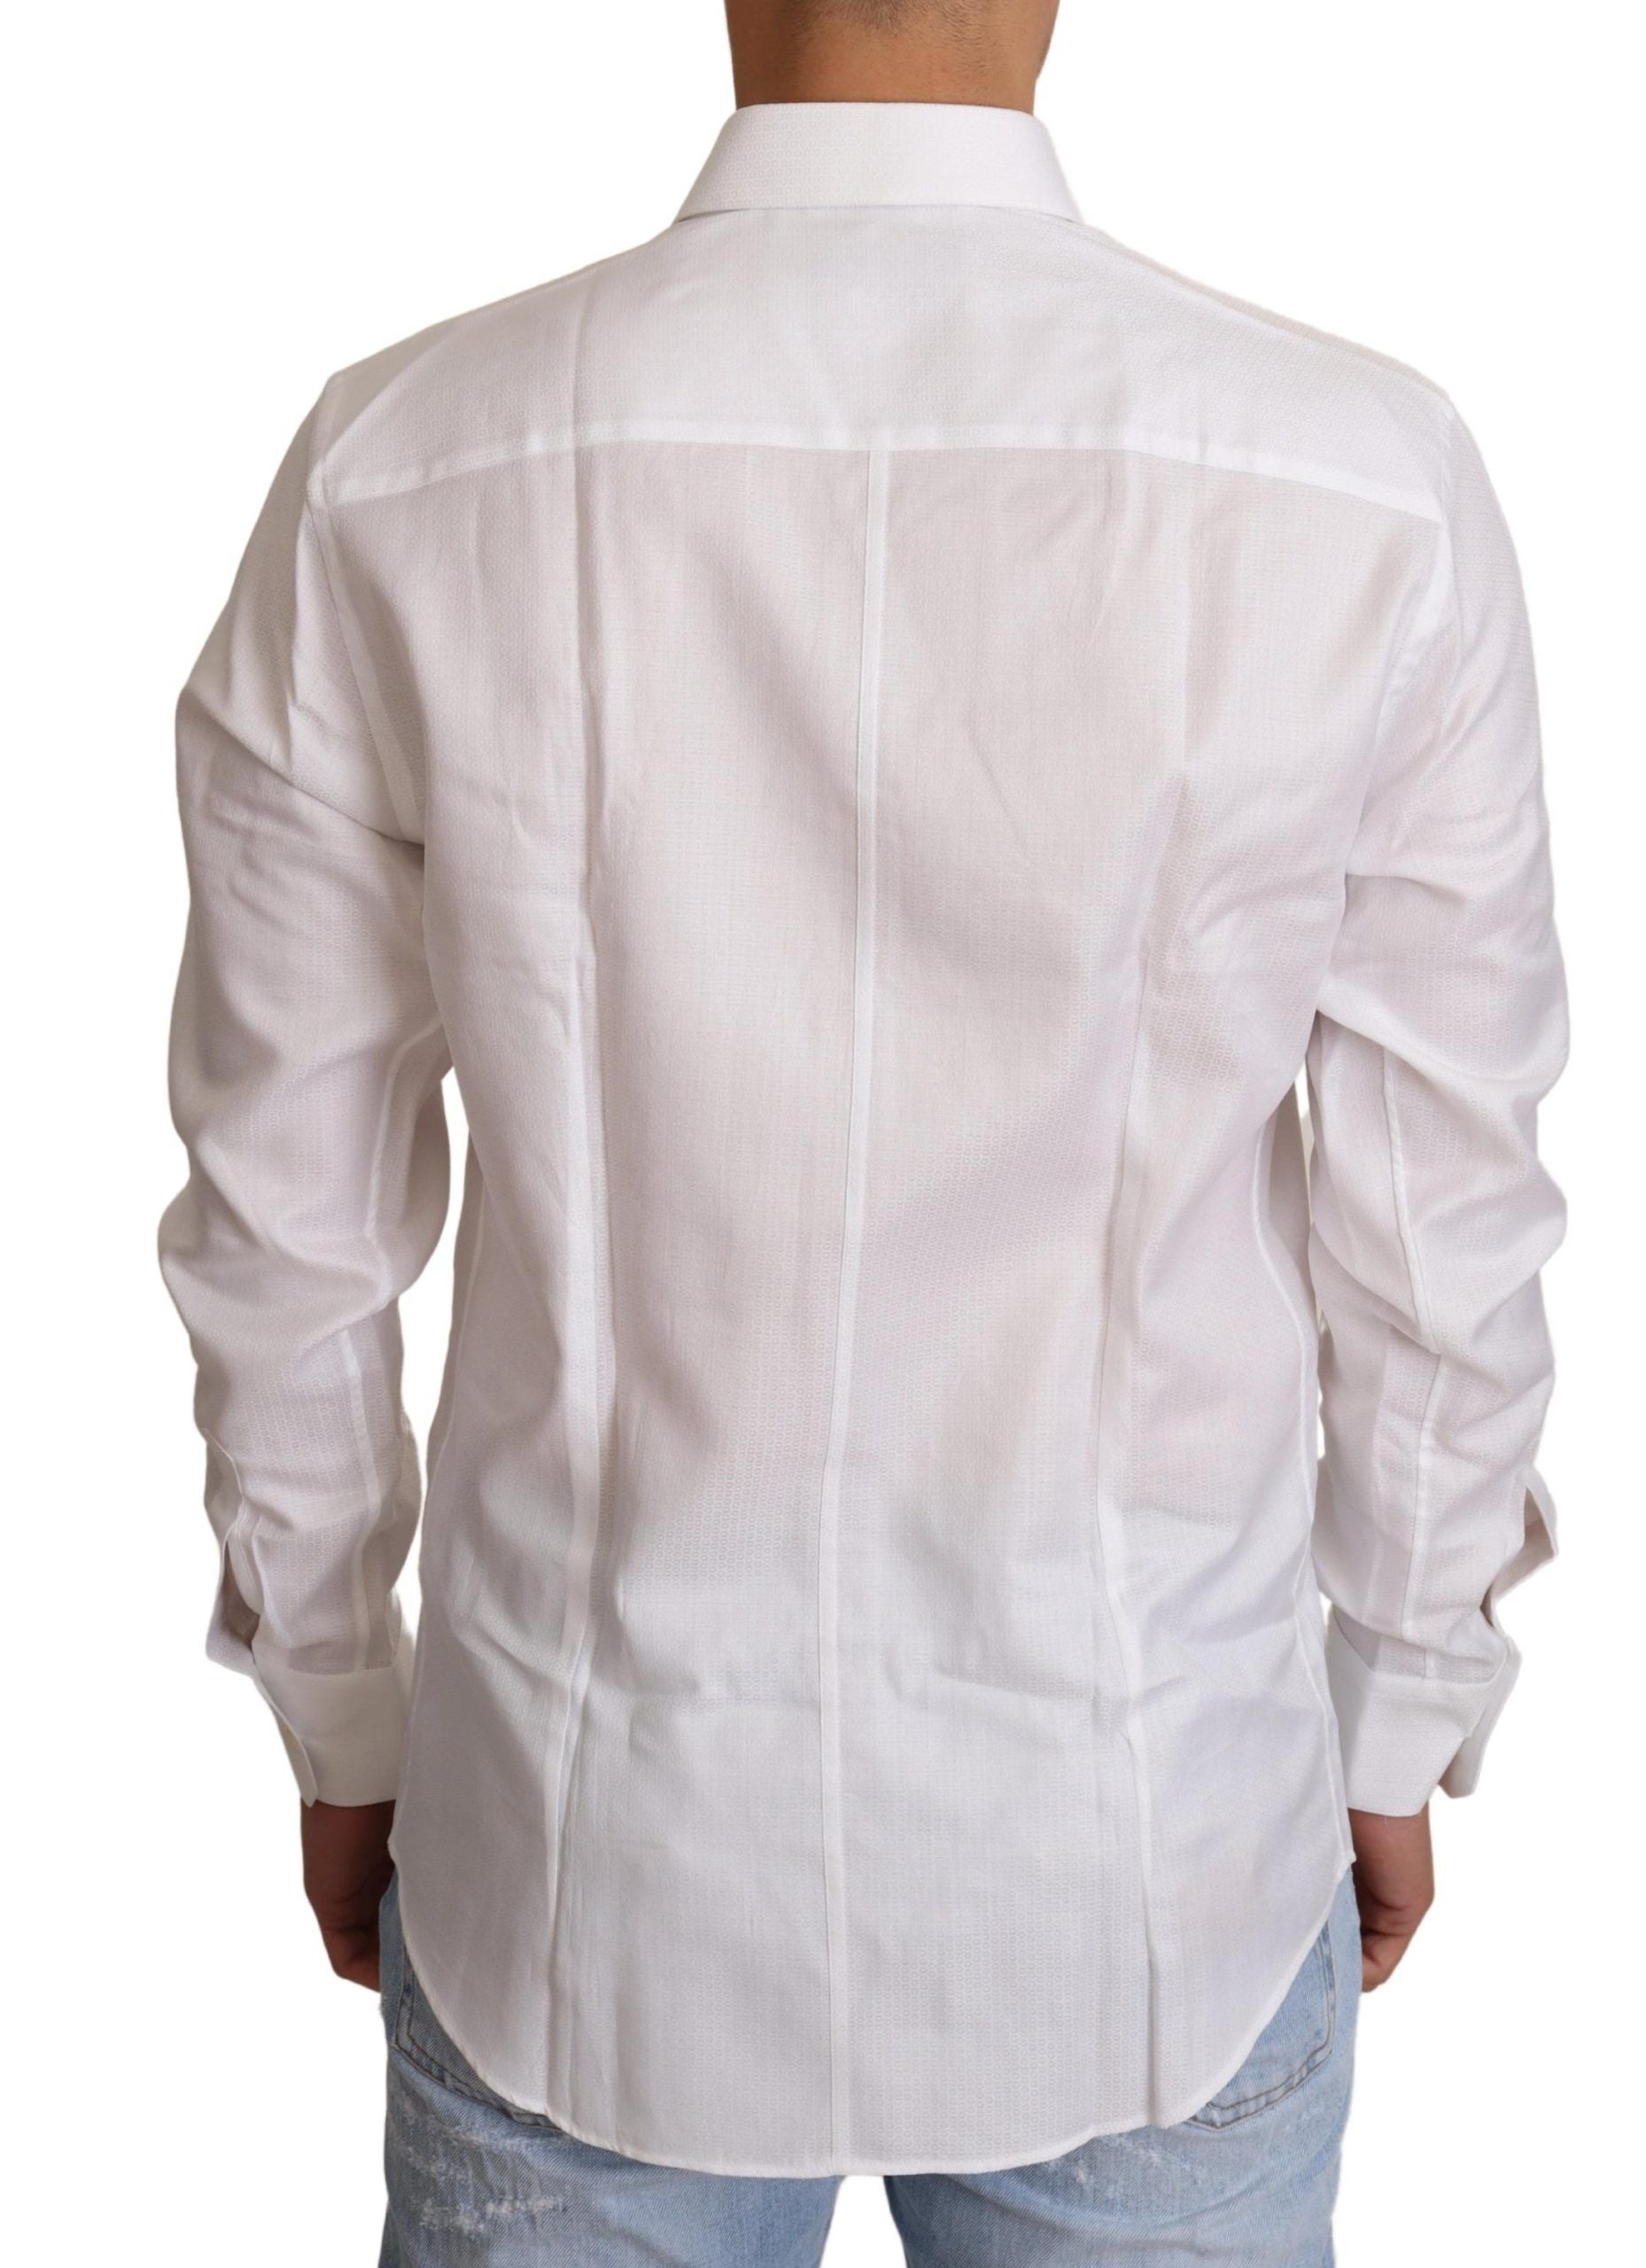 Dolce & Gabbana Elegant White Martini Slim Fit Dress Shirt